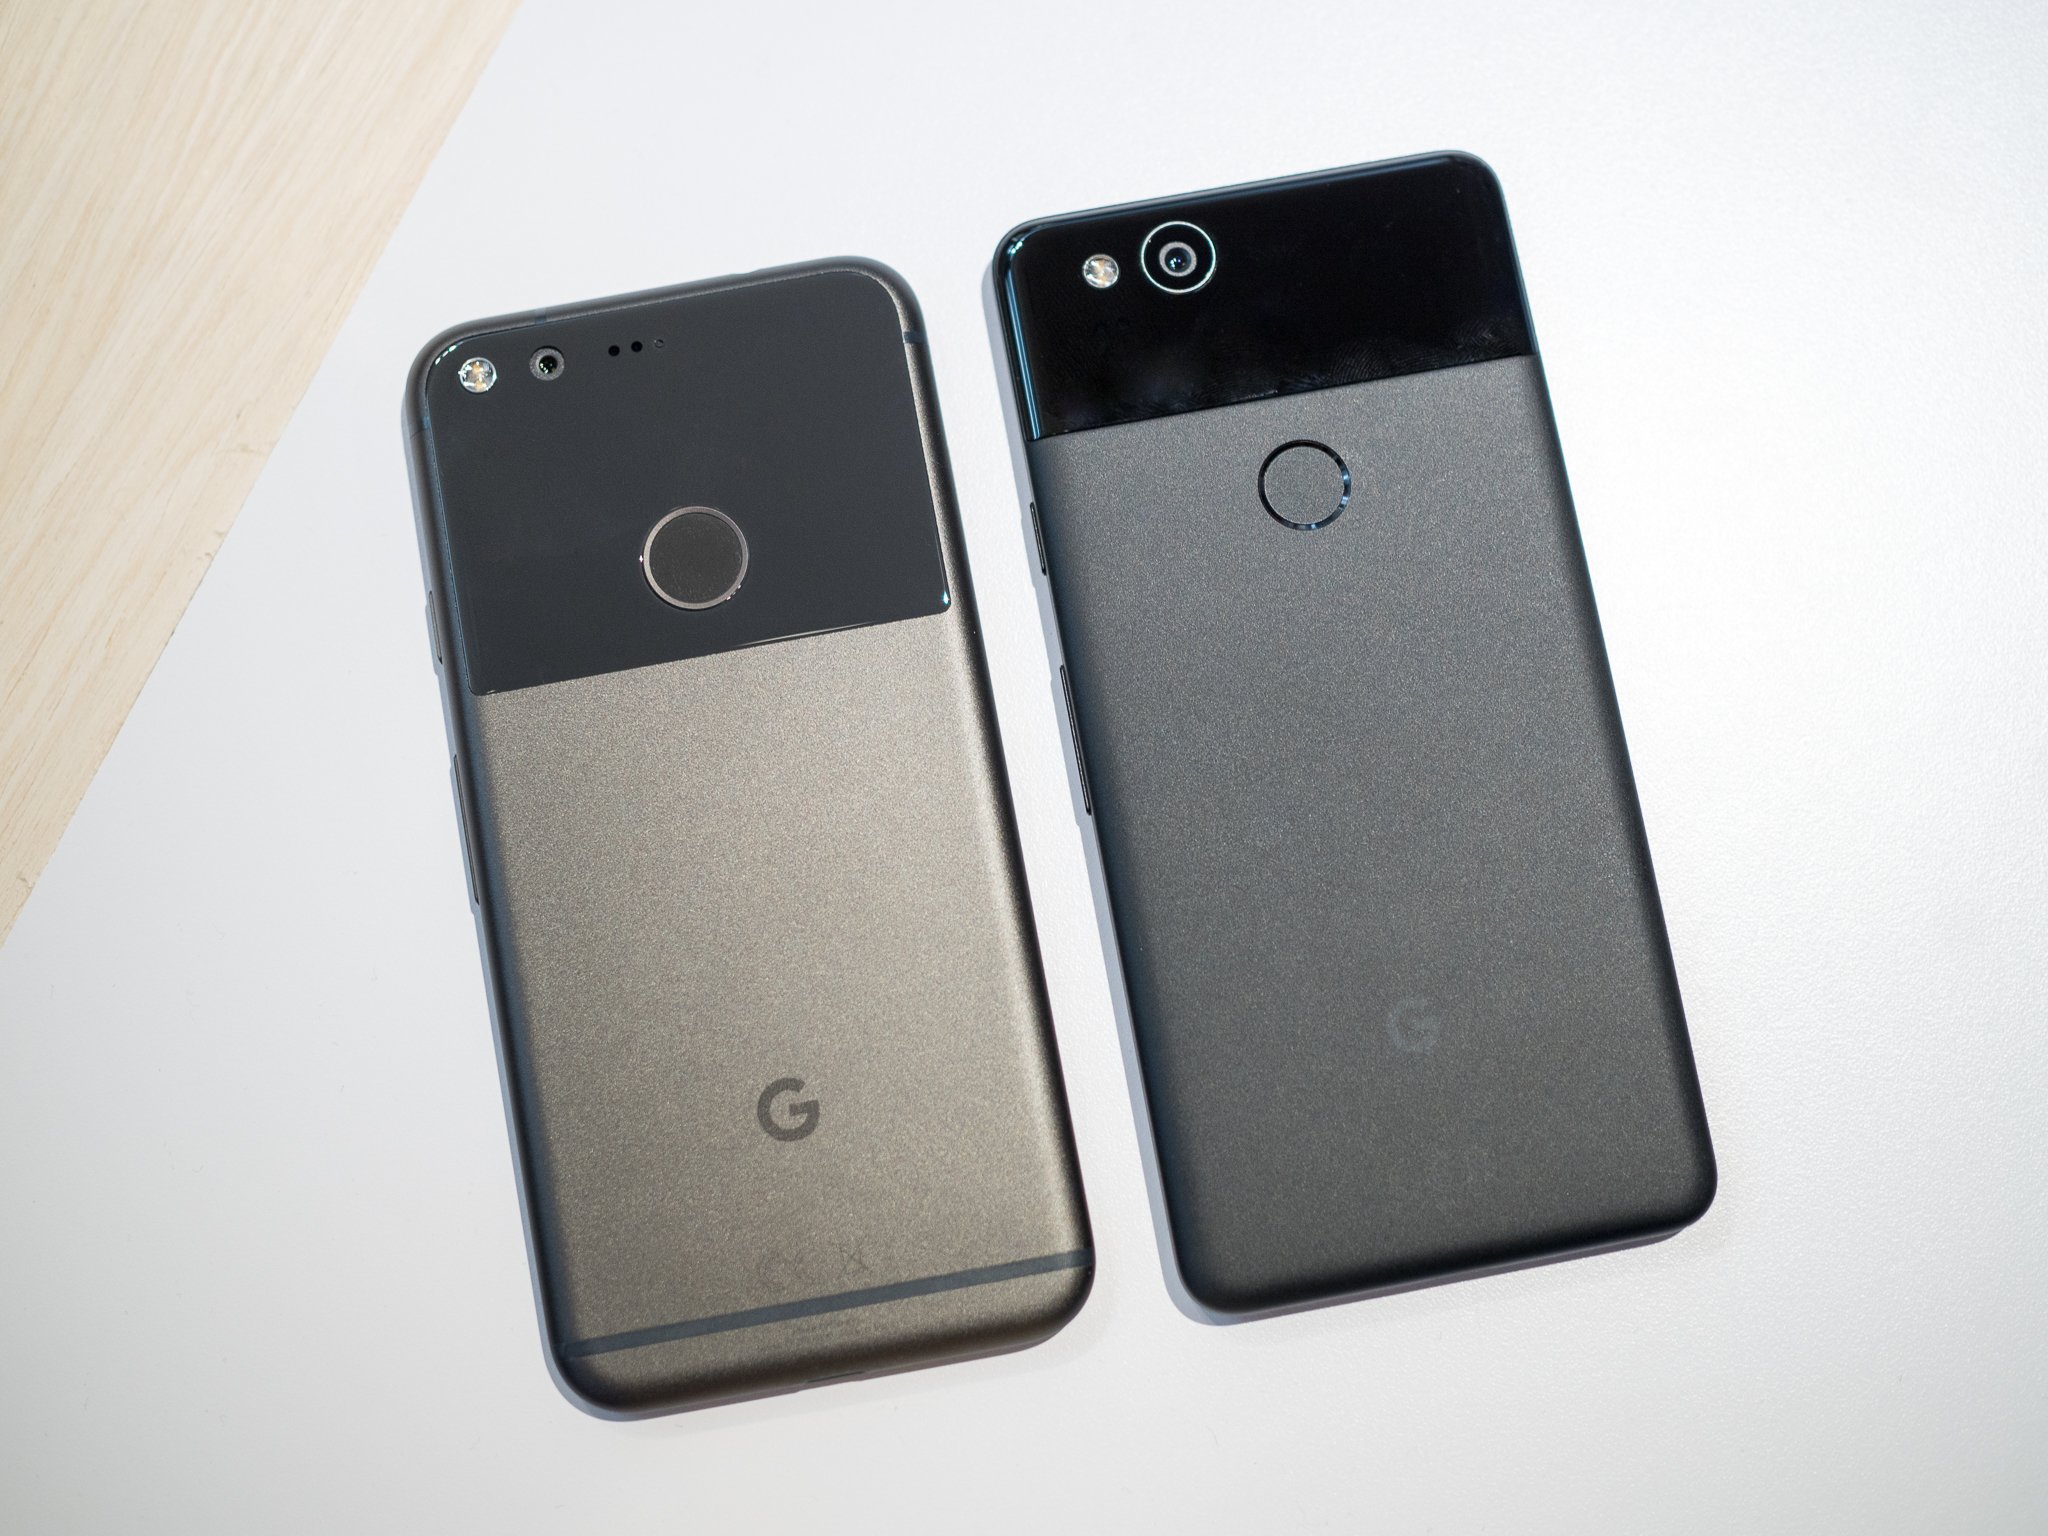 Google Pixel and Google Pixel 2